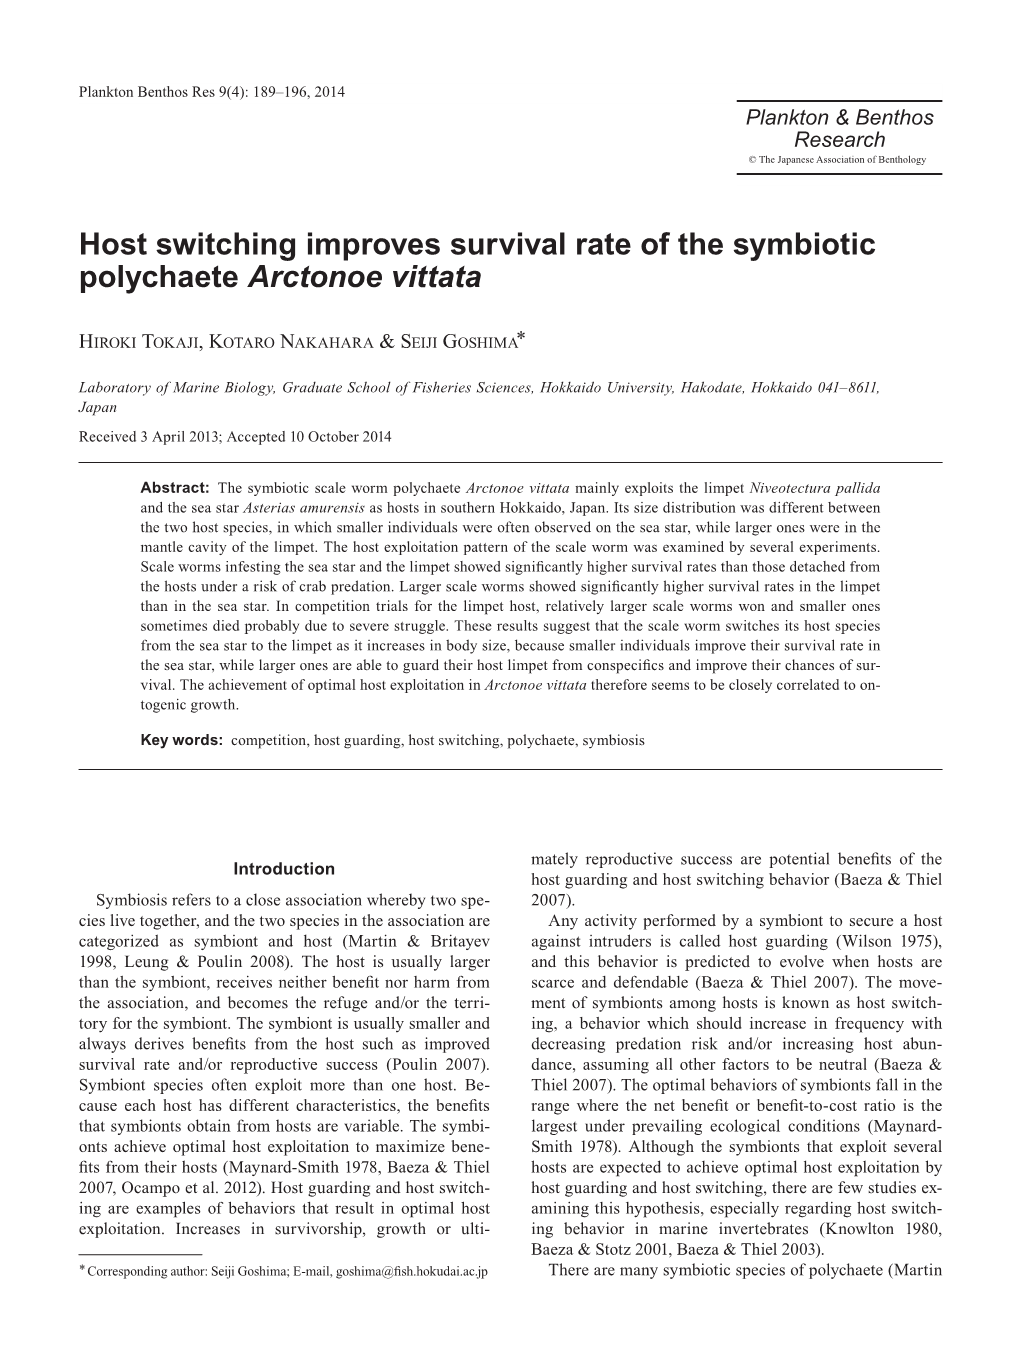 Host Switching Improves Survival Rate of the Symbiotic Polychaete Arctonoe Vittata